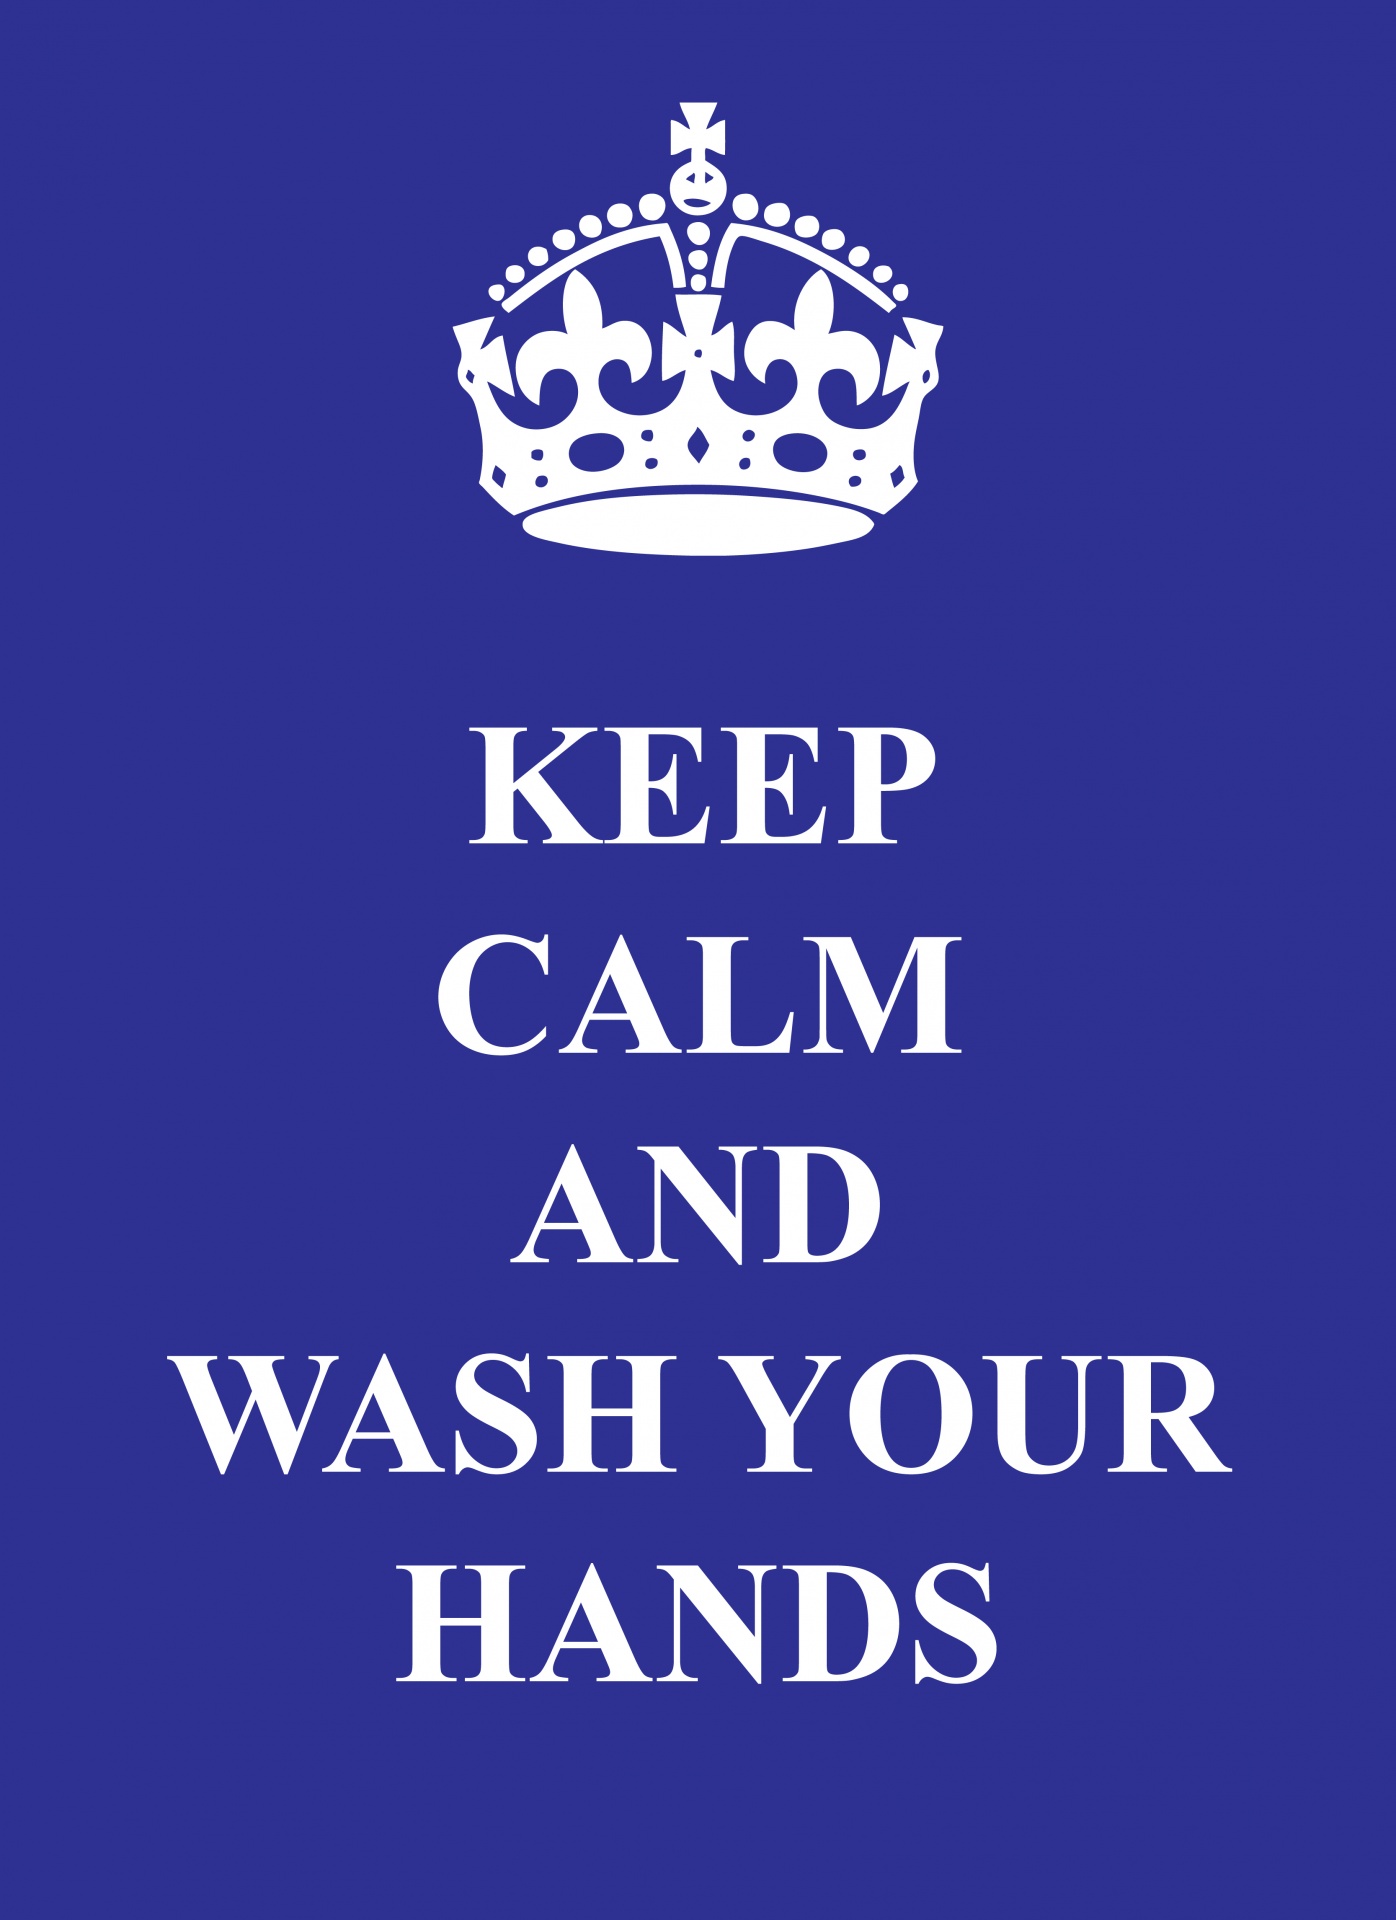 Keep Calm Wash Hands